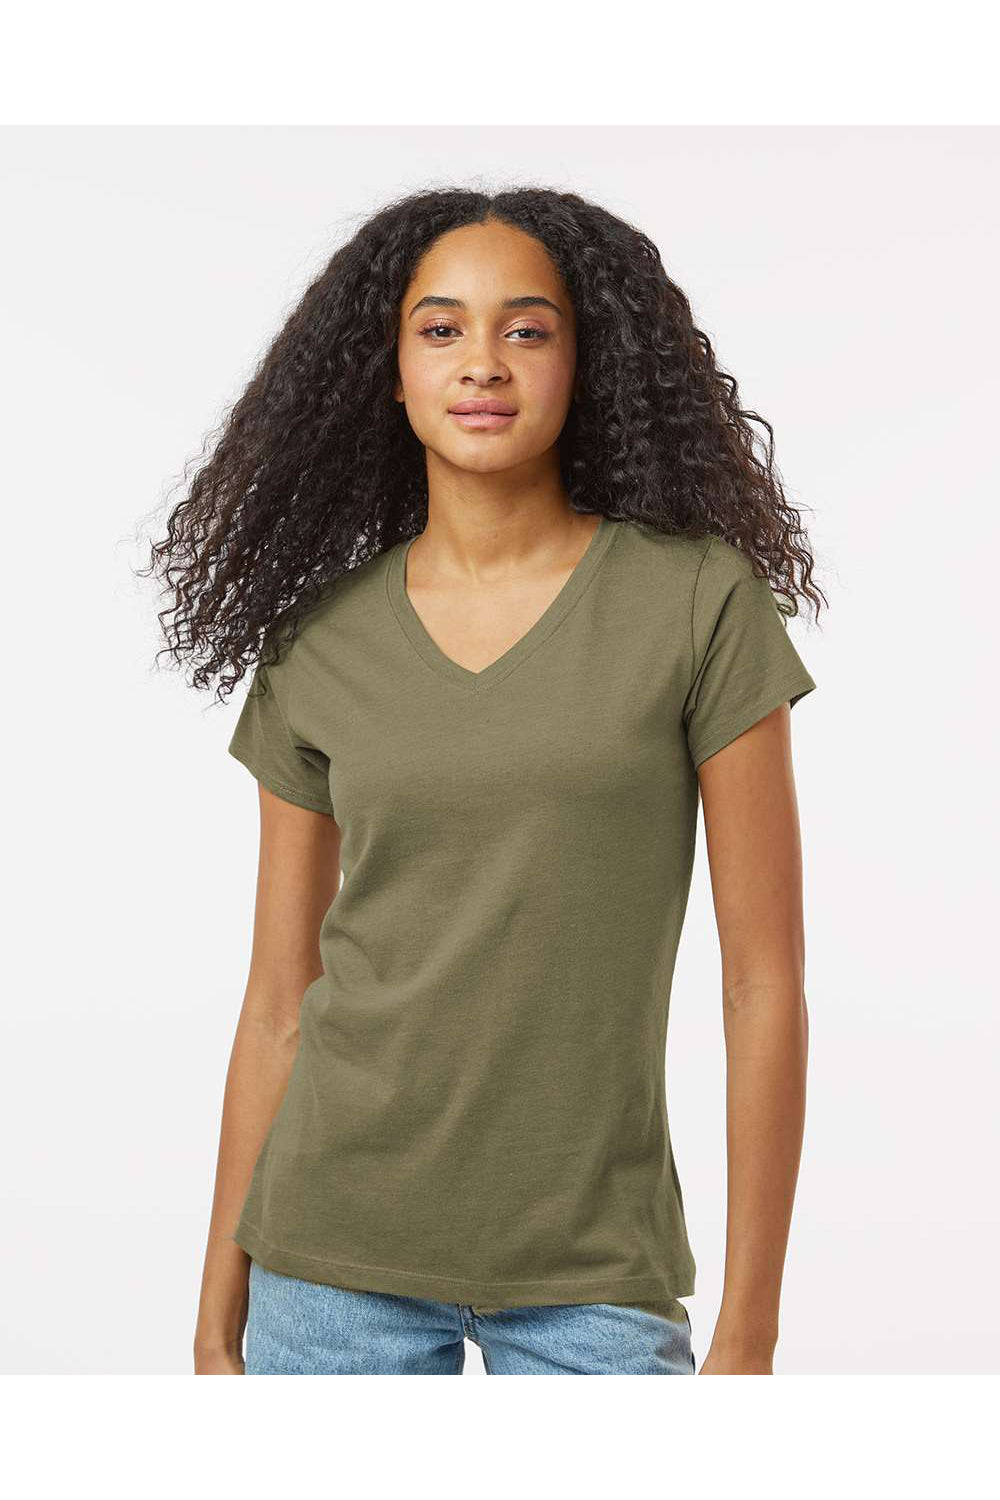 Kastlfel 2011 Womens RecycledSoft Short Sleeve V-Neck T-Shirt Moss Green Model Side